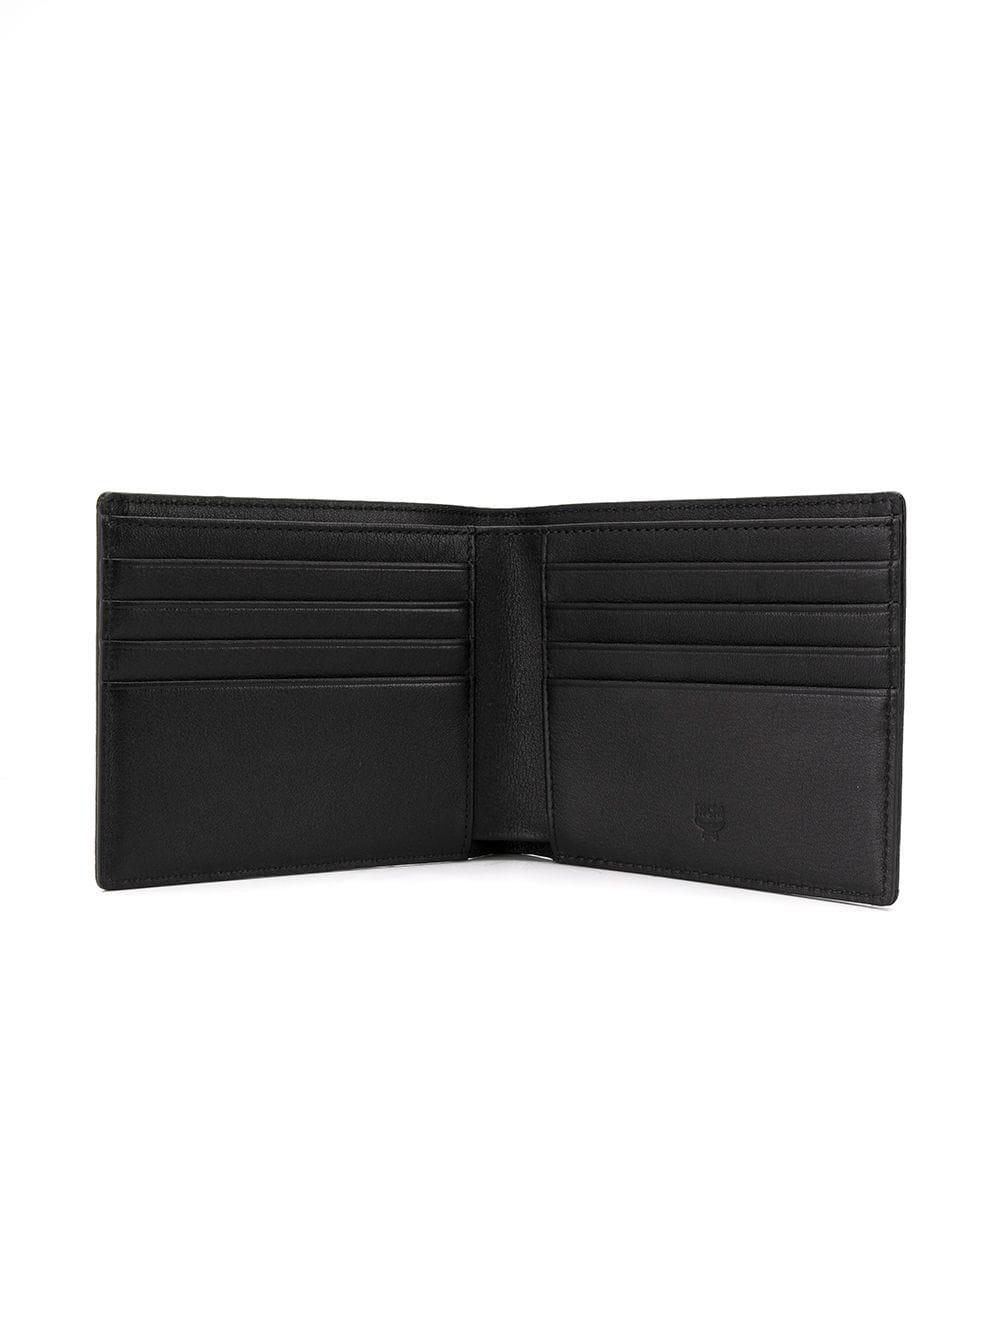 MCM Visetos Billfold Wallet in White/ Black (Black) for Men - Lyst